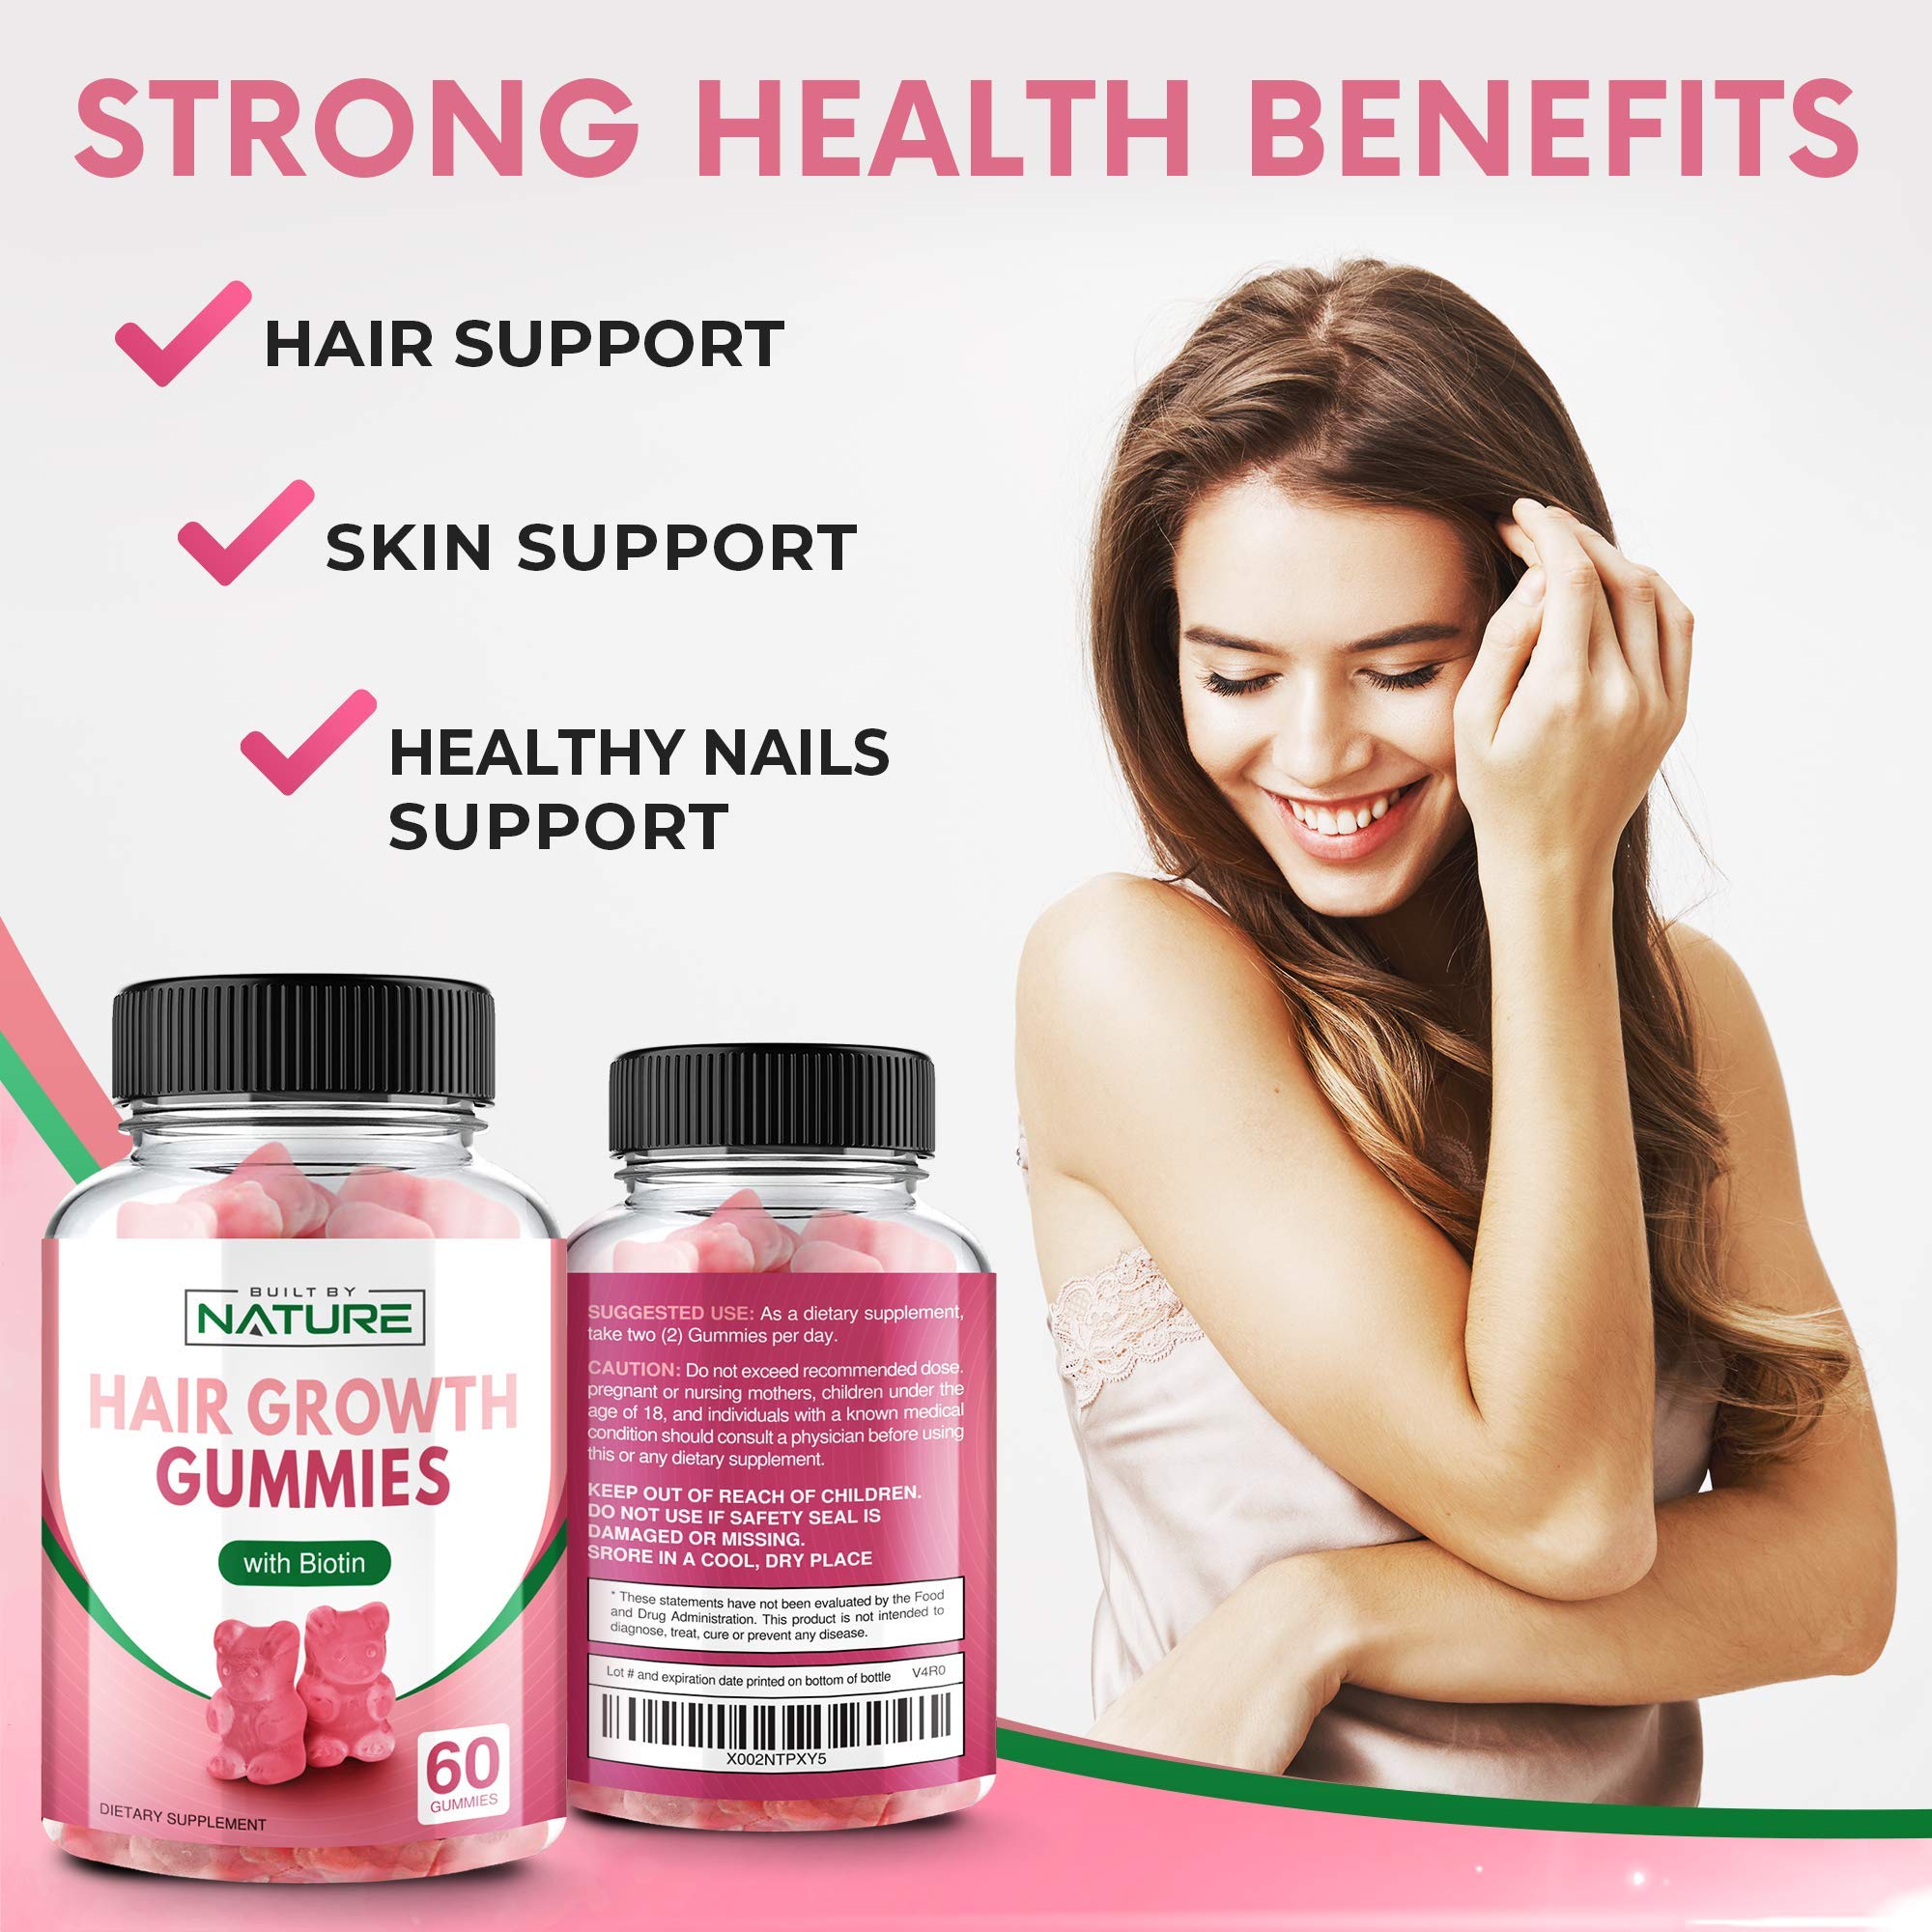 Hair Vitamins - Ultra Strength Biotin 5000 mcg with Vitamins C, E, D & B12 - Supports Hair Growth, Strength & Health - Vegetarian, Non-GMO, Gluten-Free Gummy Supplement - Biotin for Women, 60 Gummies